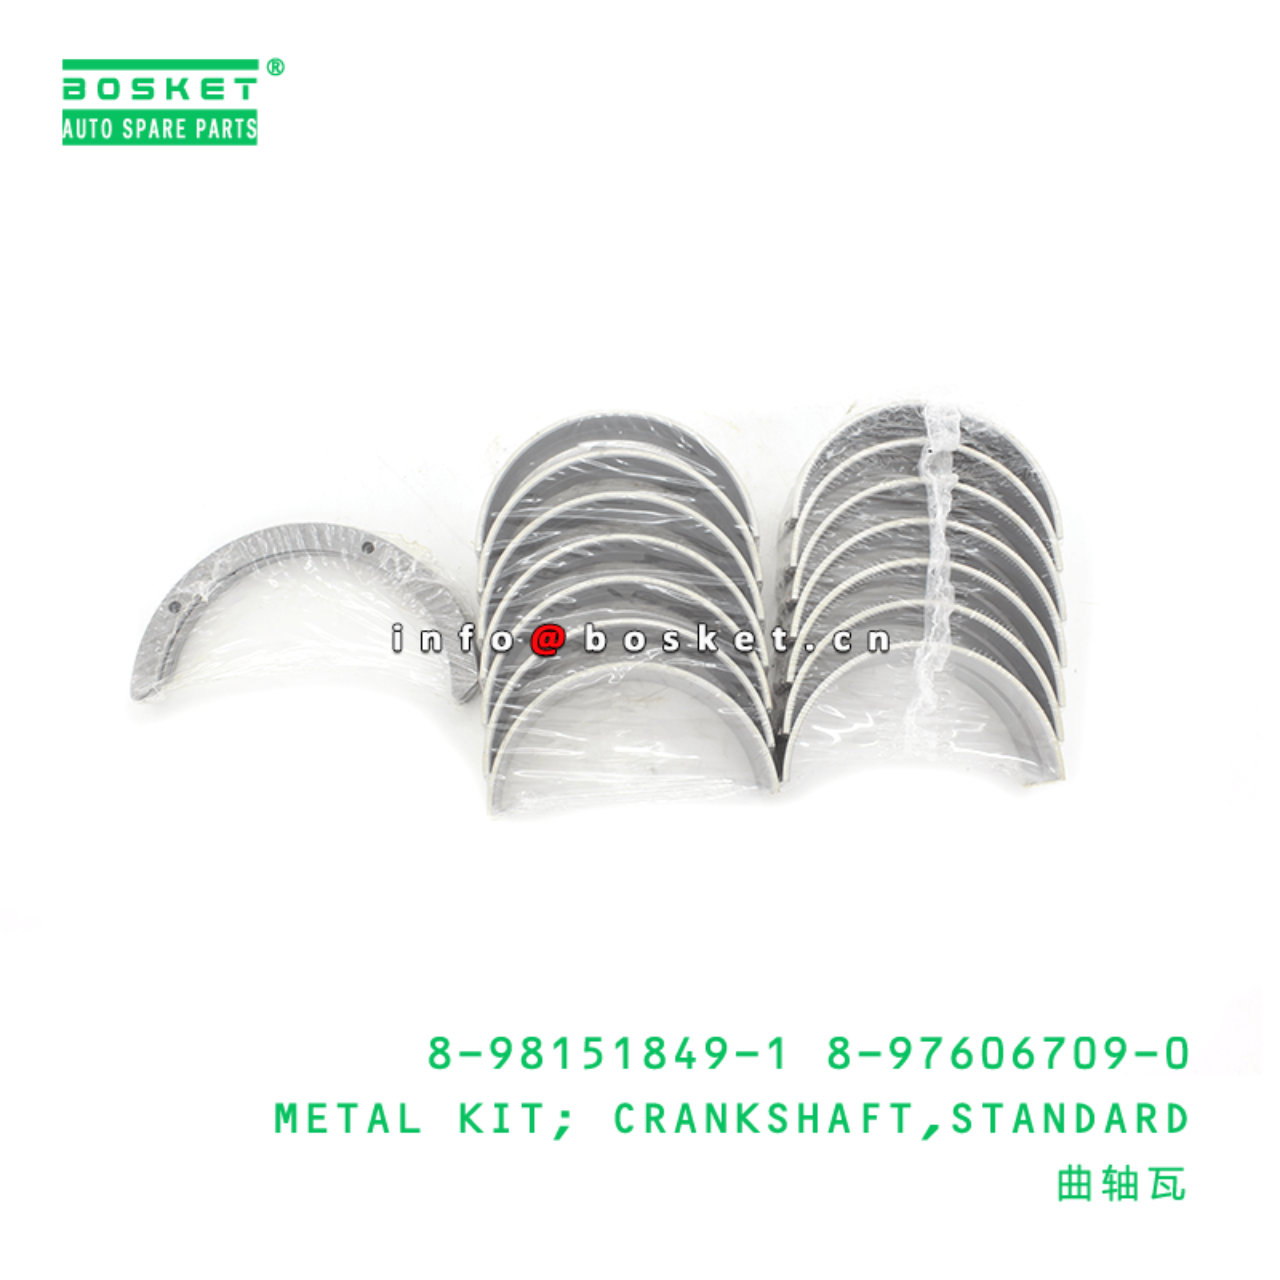  8-98151849-1 8-97606709-0 Standard Crankshaft Metal Kit 8981518491 8976067090 Suitable for ISUZU CY